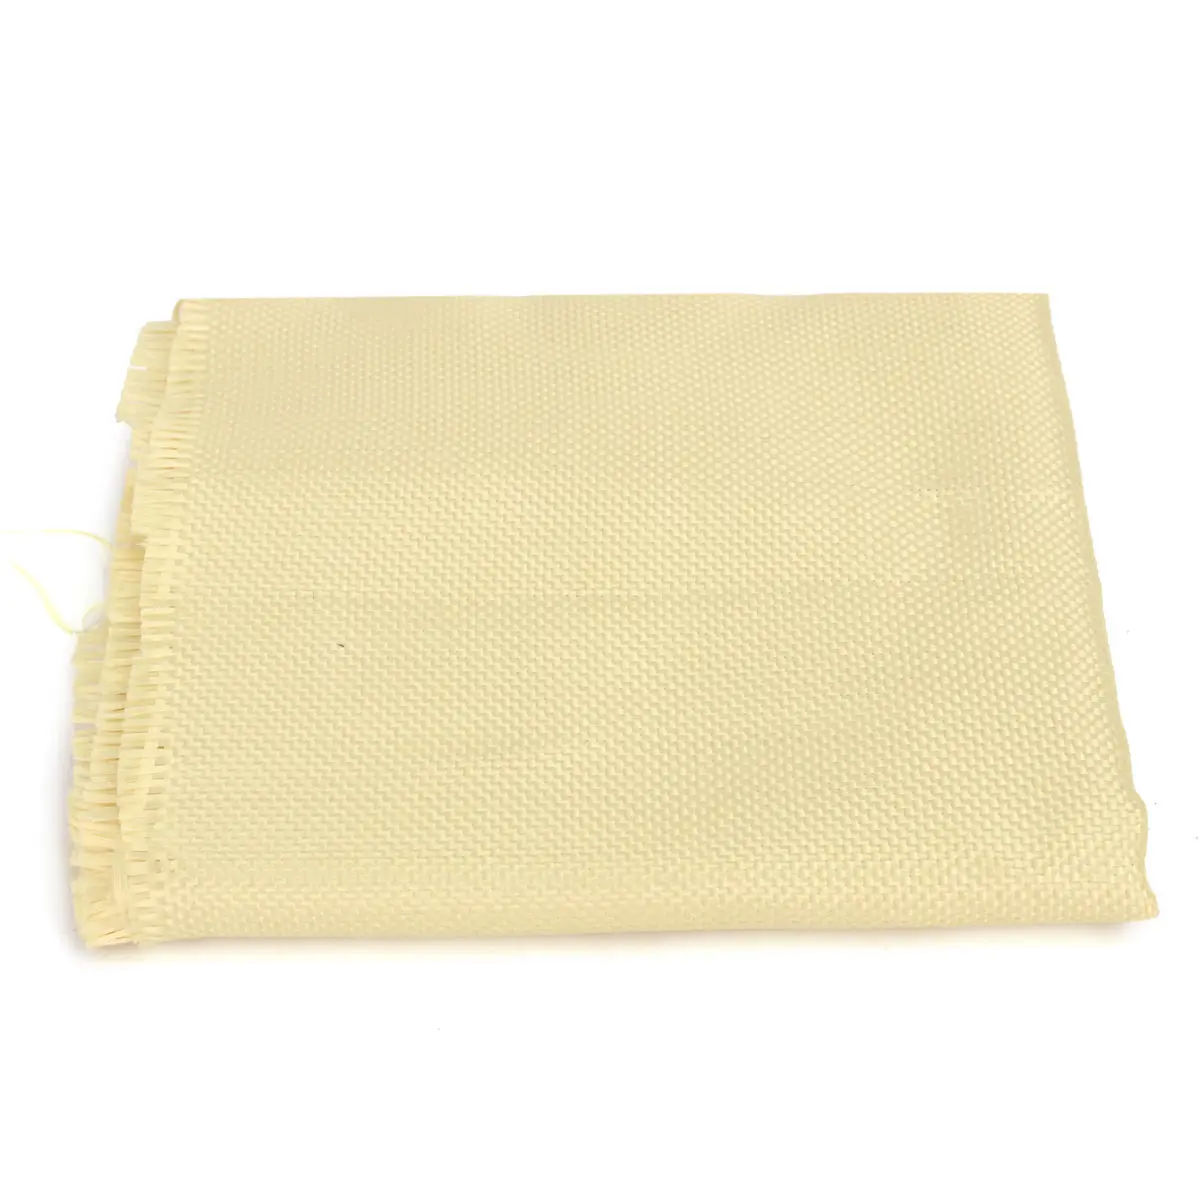 100*30cm 200gsm Kevlar Fabric Woven Aramid Fiber Cloth Plain Color Yellow